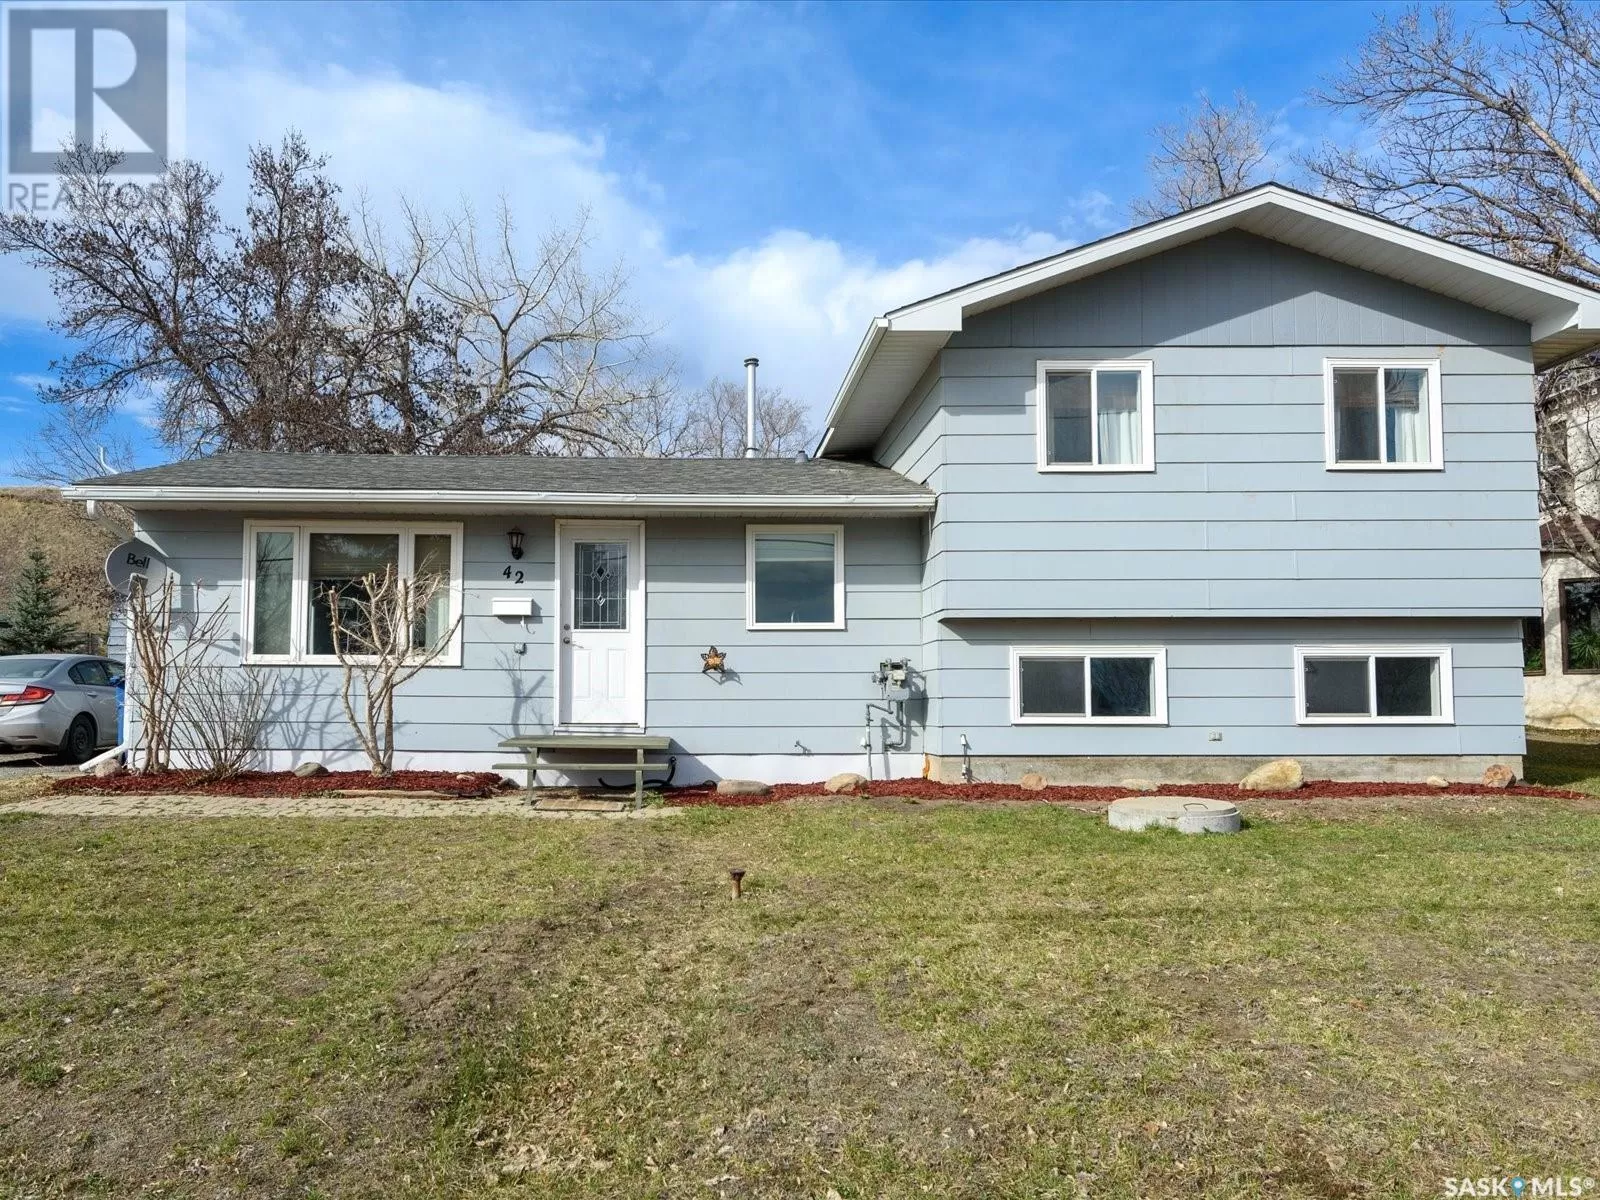 House for rent: 42 Tennant Street, Craven, Saskatchewan S0G 0W0